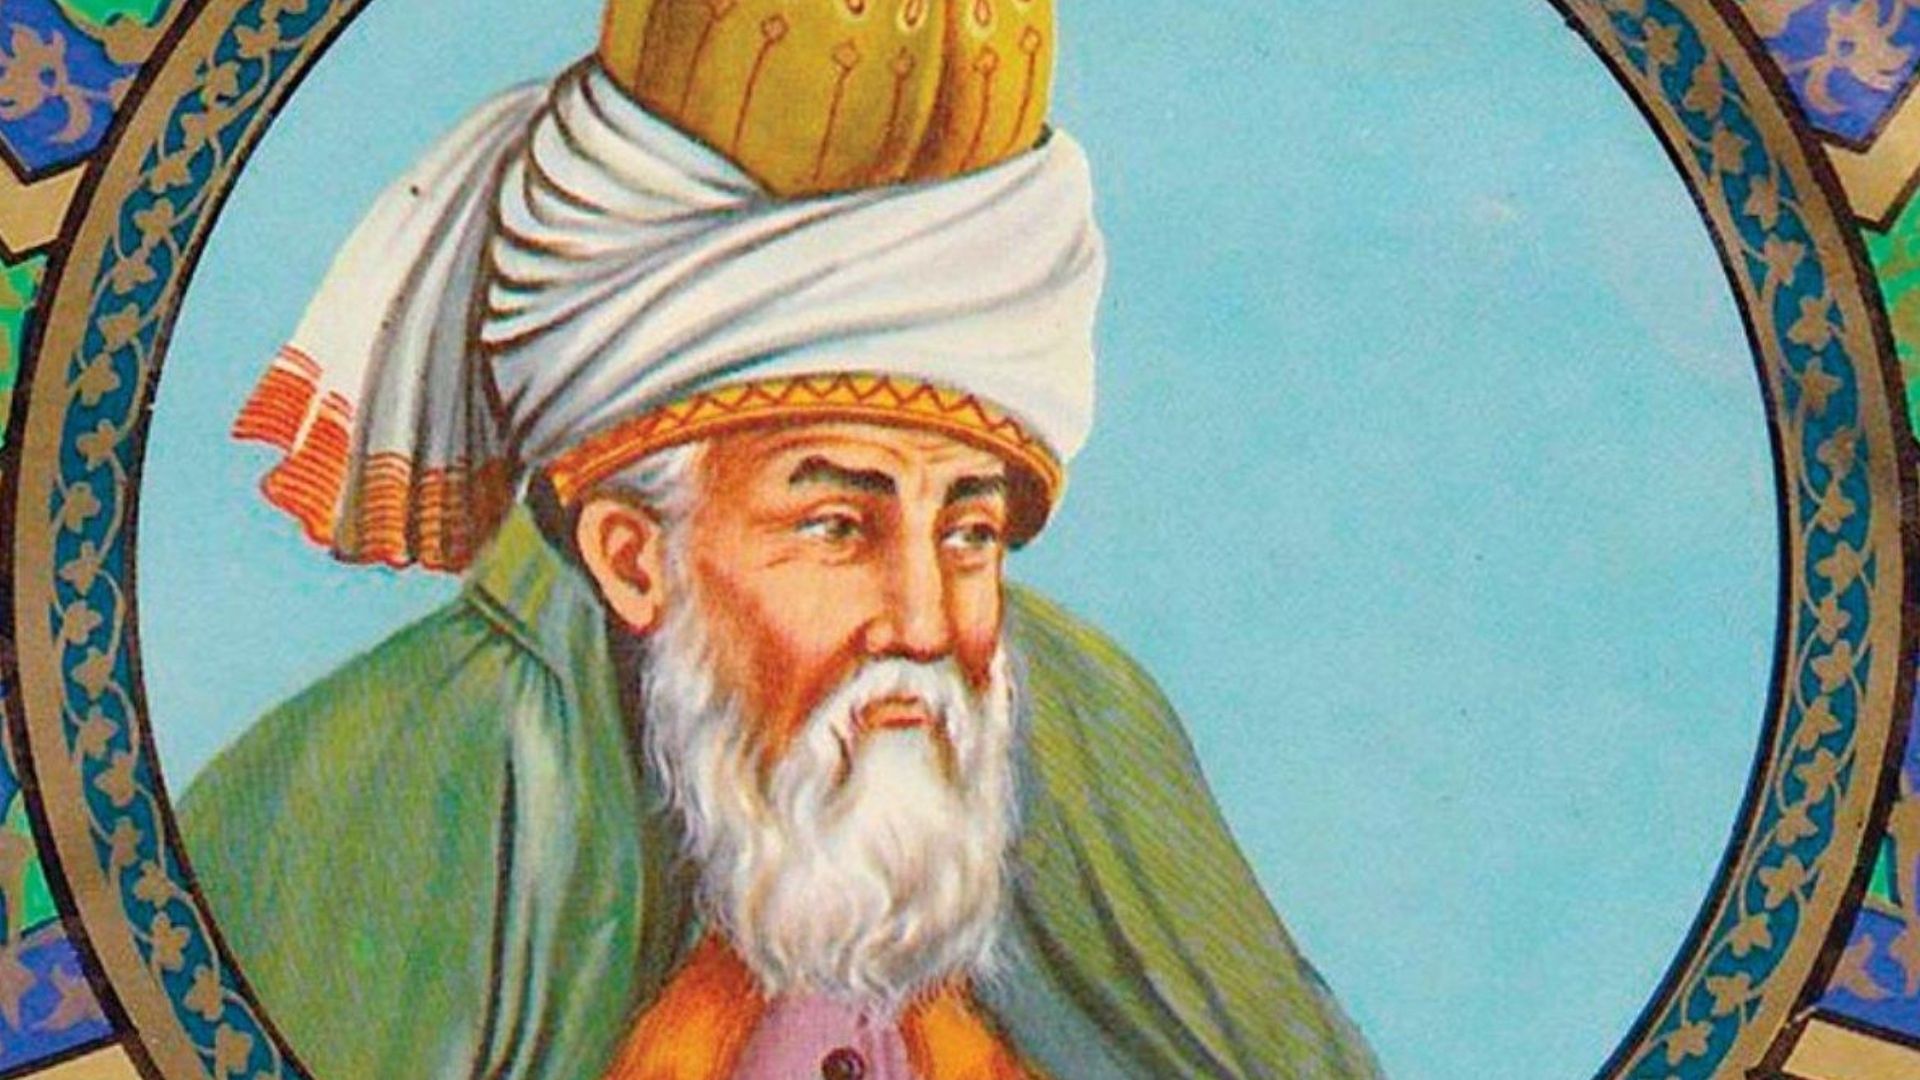 Mewlana Jalaluddin Rumi